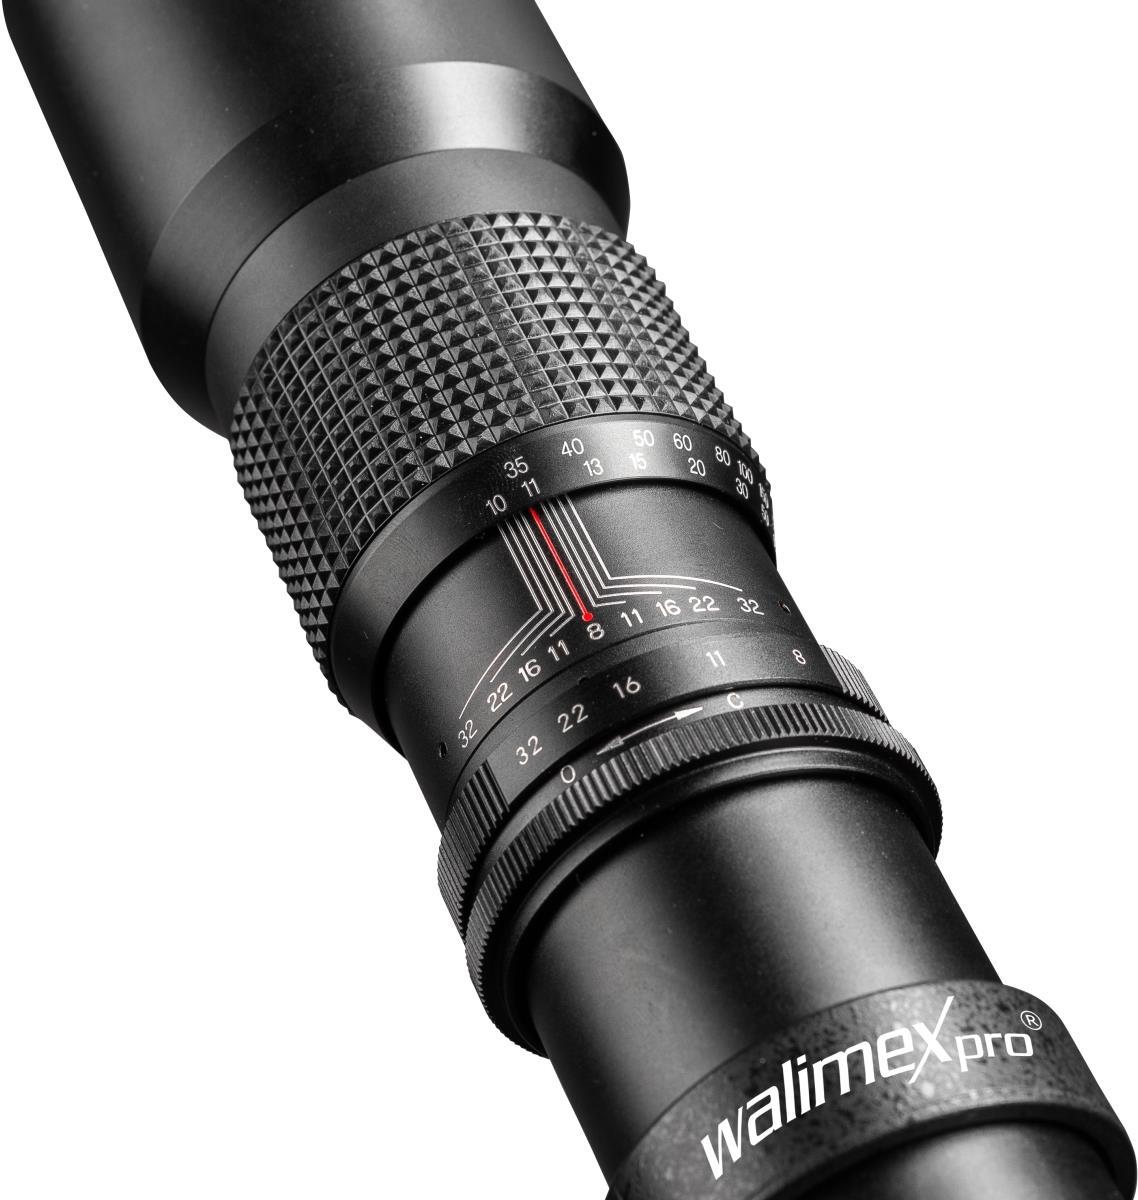 Walimex 12932 - SLR - M42 - 4/4 - Manuell - 0 - 500 mm - Canon - Konica Minolta - Nikon - Olympus - Pentax - Samsung - Sony (12932) von Mantona